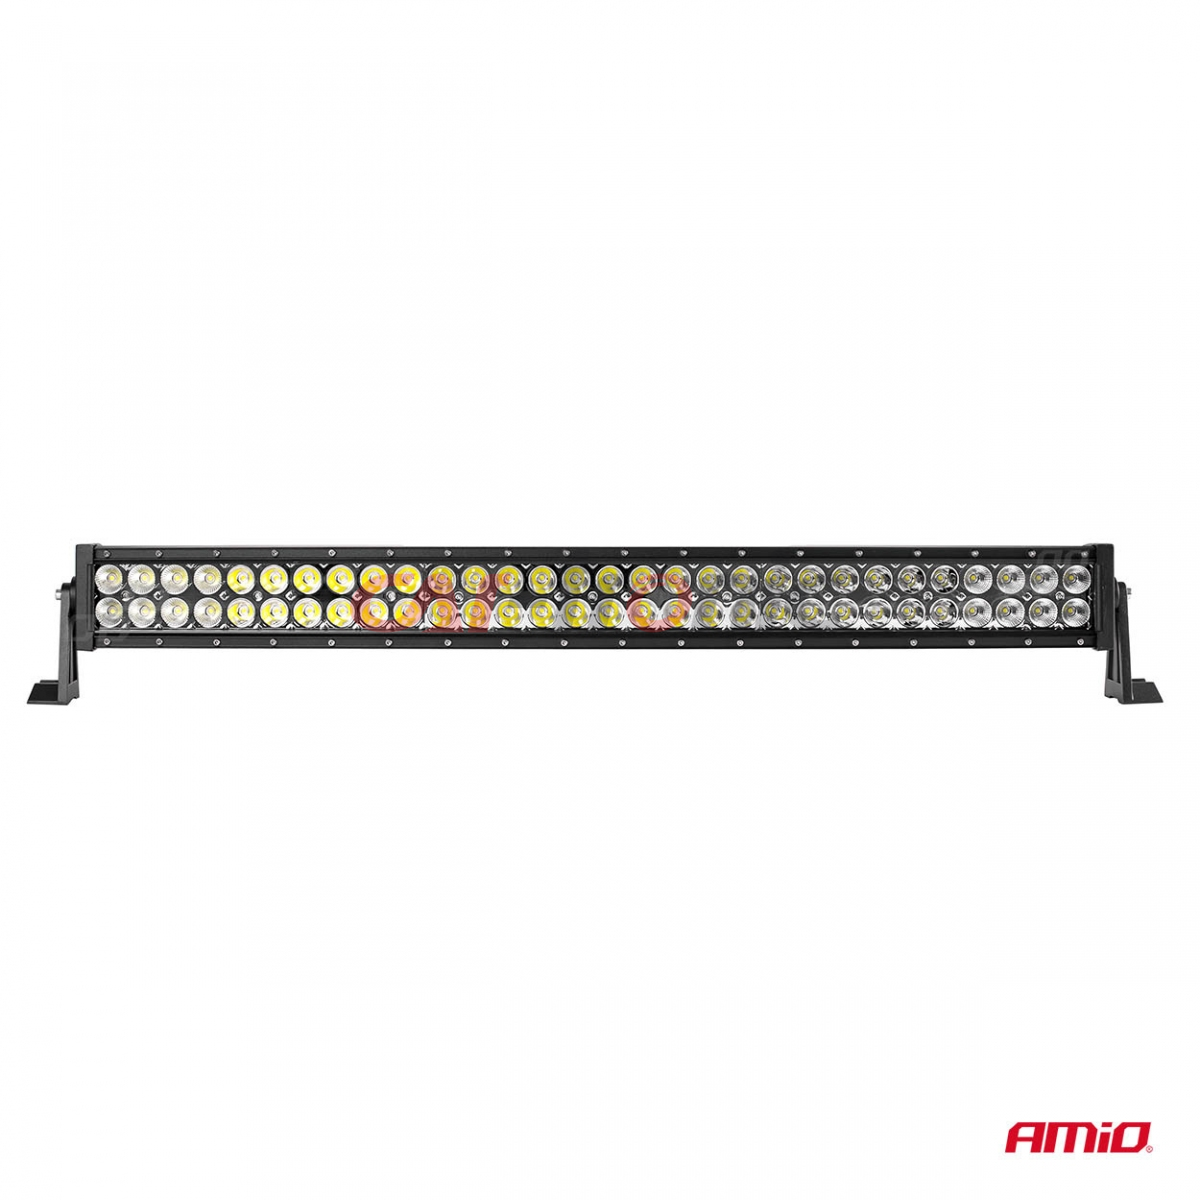 Lampa robocza panelowa LED BAR prosta 87 cm 9-36V AMIO-02439 AWL25